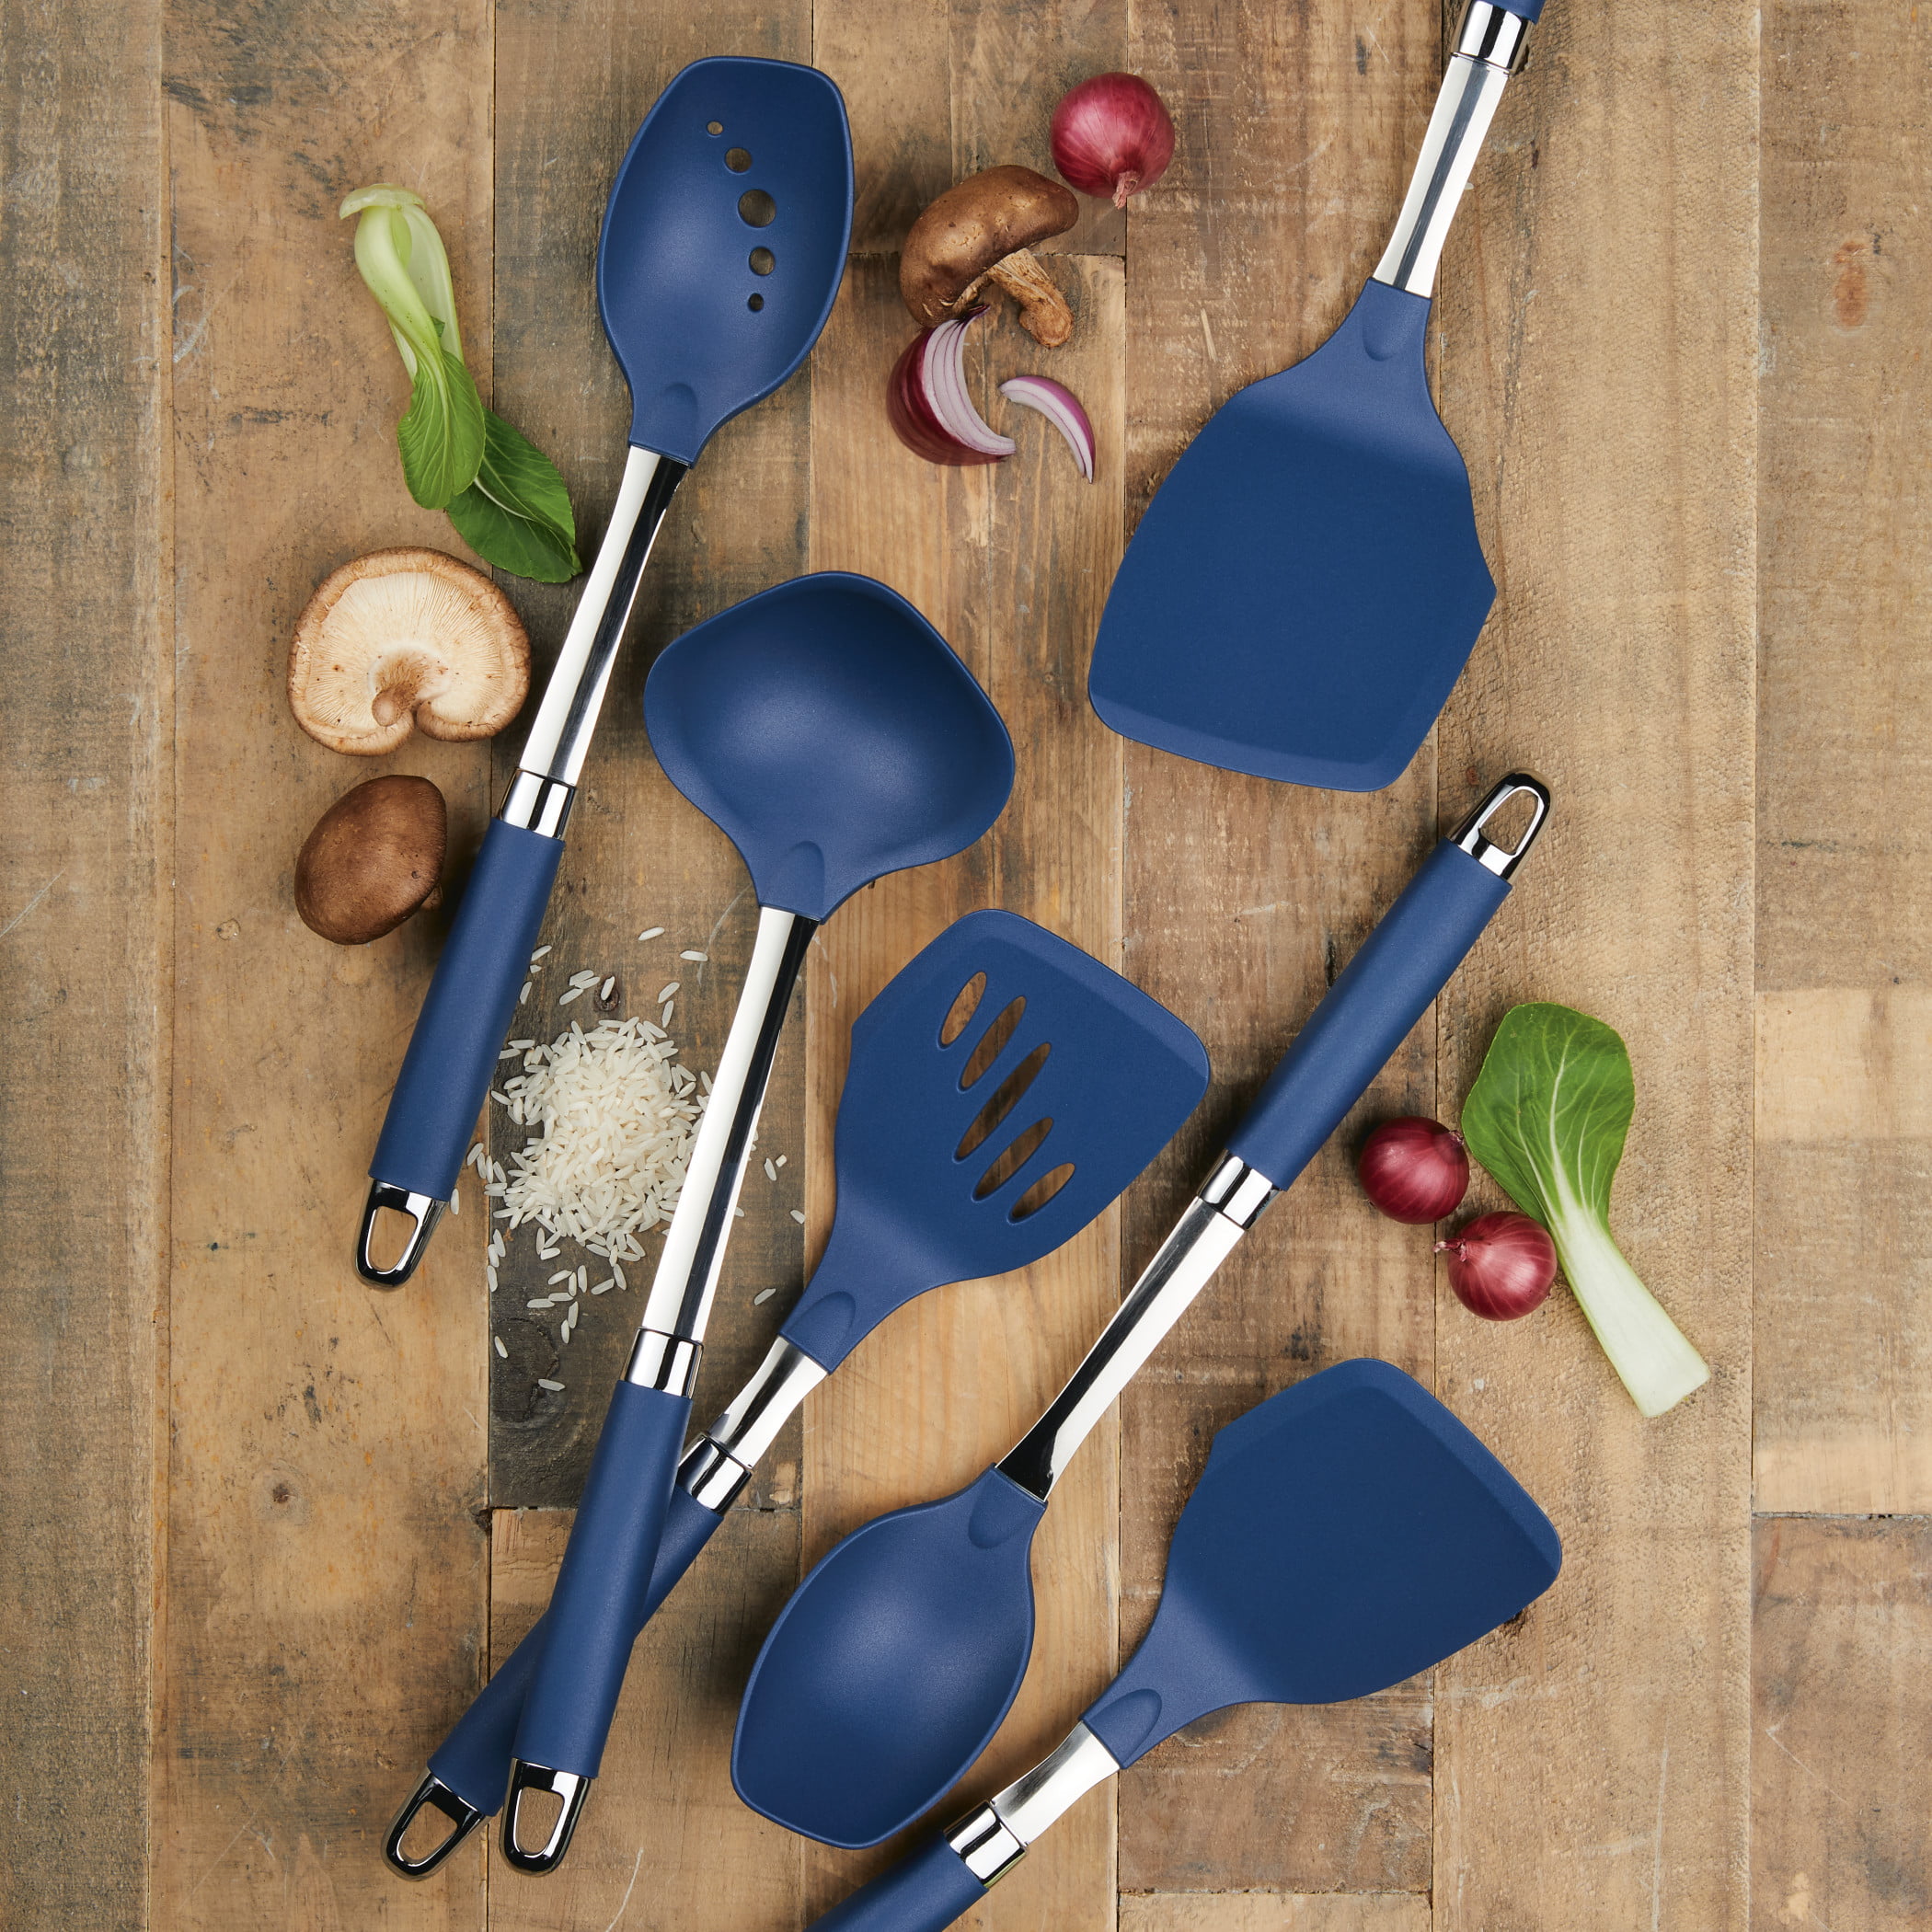 Anolon Tools and Gadgets SureGrip Nonstick Kitchen Utensil Set, 10-Piece